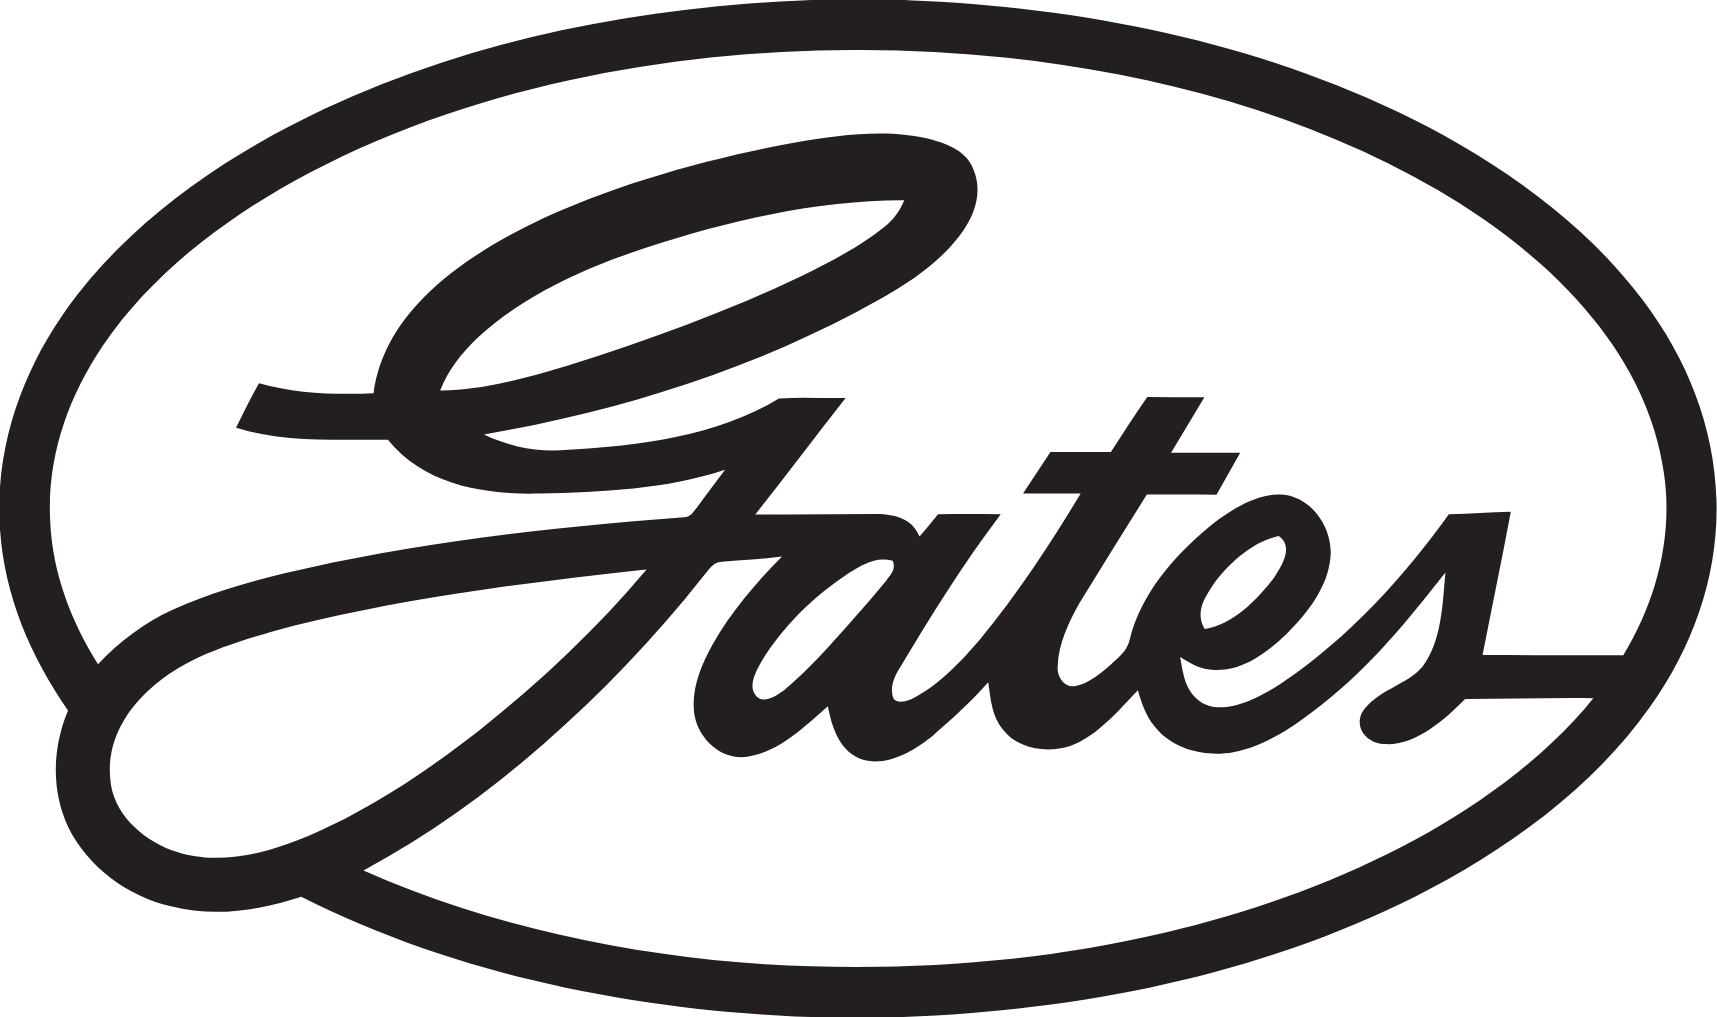 Gates Industrial Corp logo (transparent PNG)